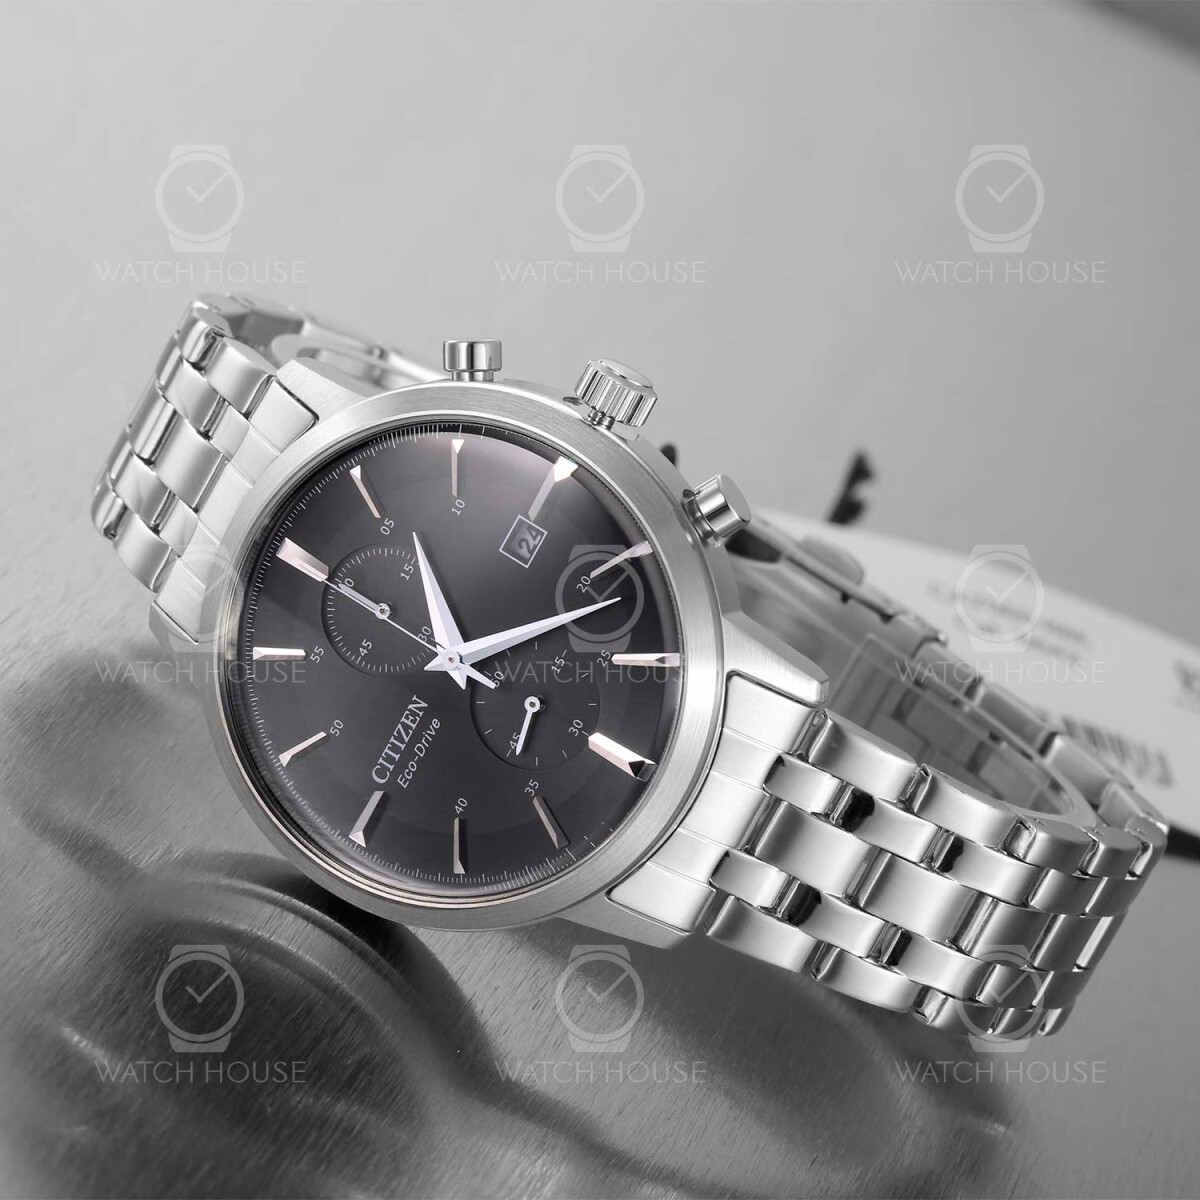 Citizen CA7060-88E - sporty timepiece with masculine...